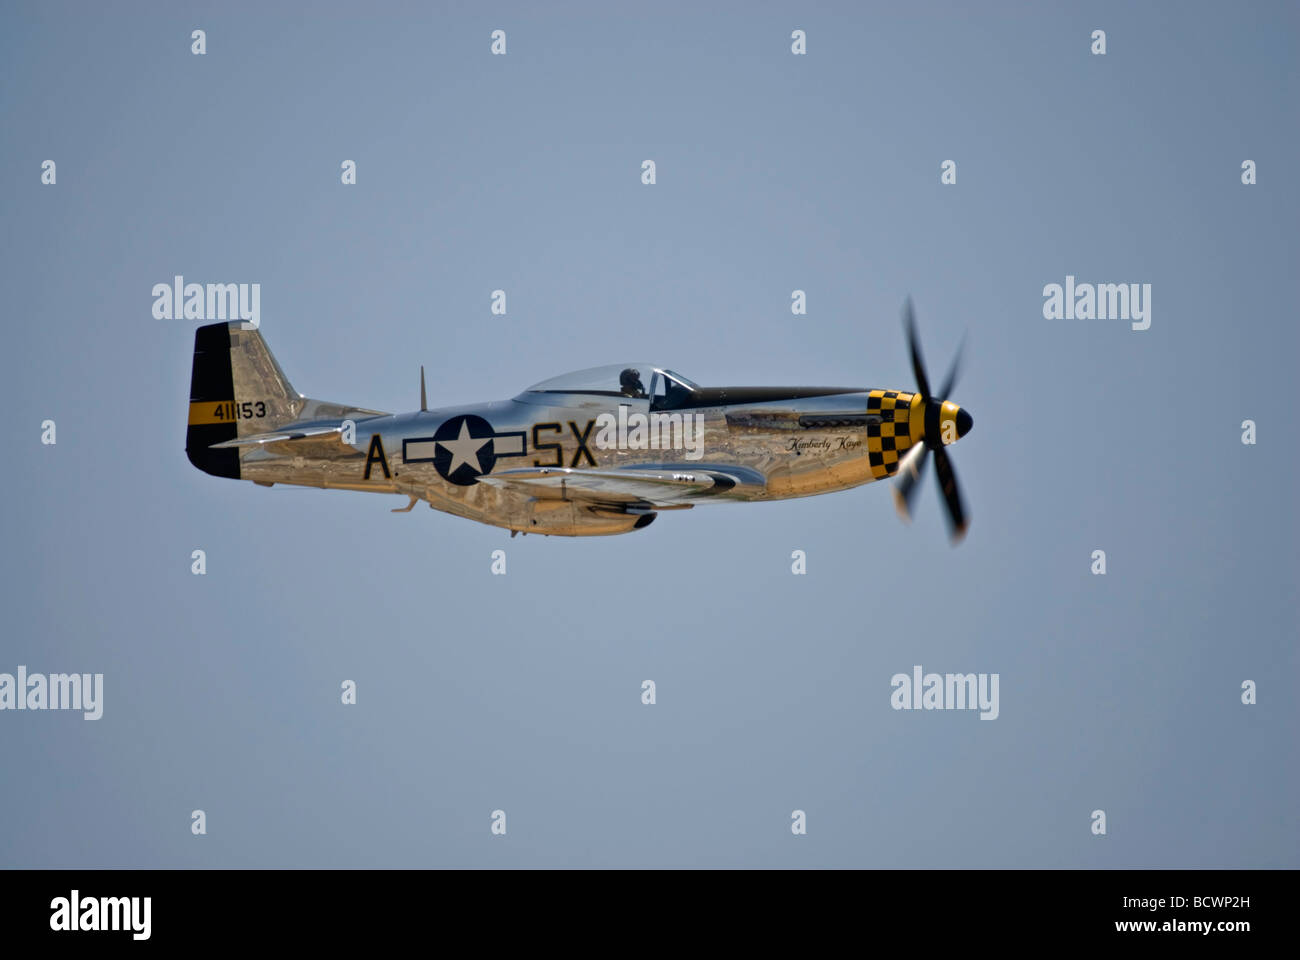 A P-51 Mustang flys at an airshow. Stock Photo